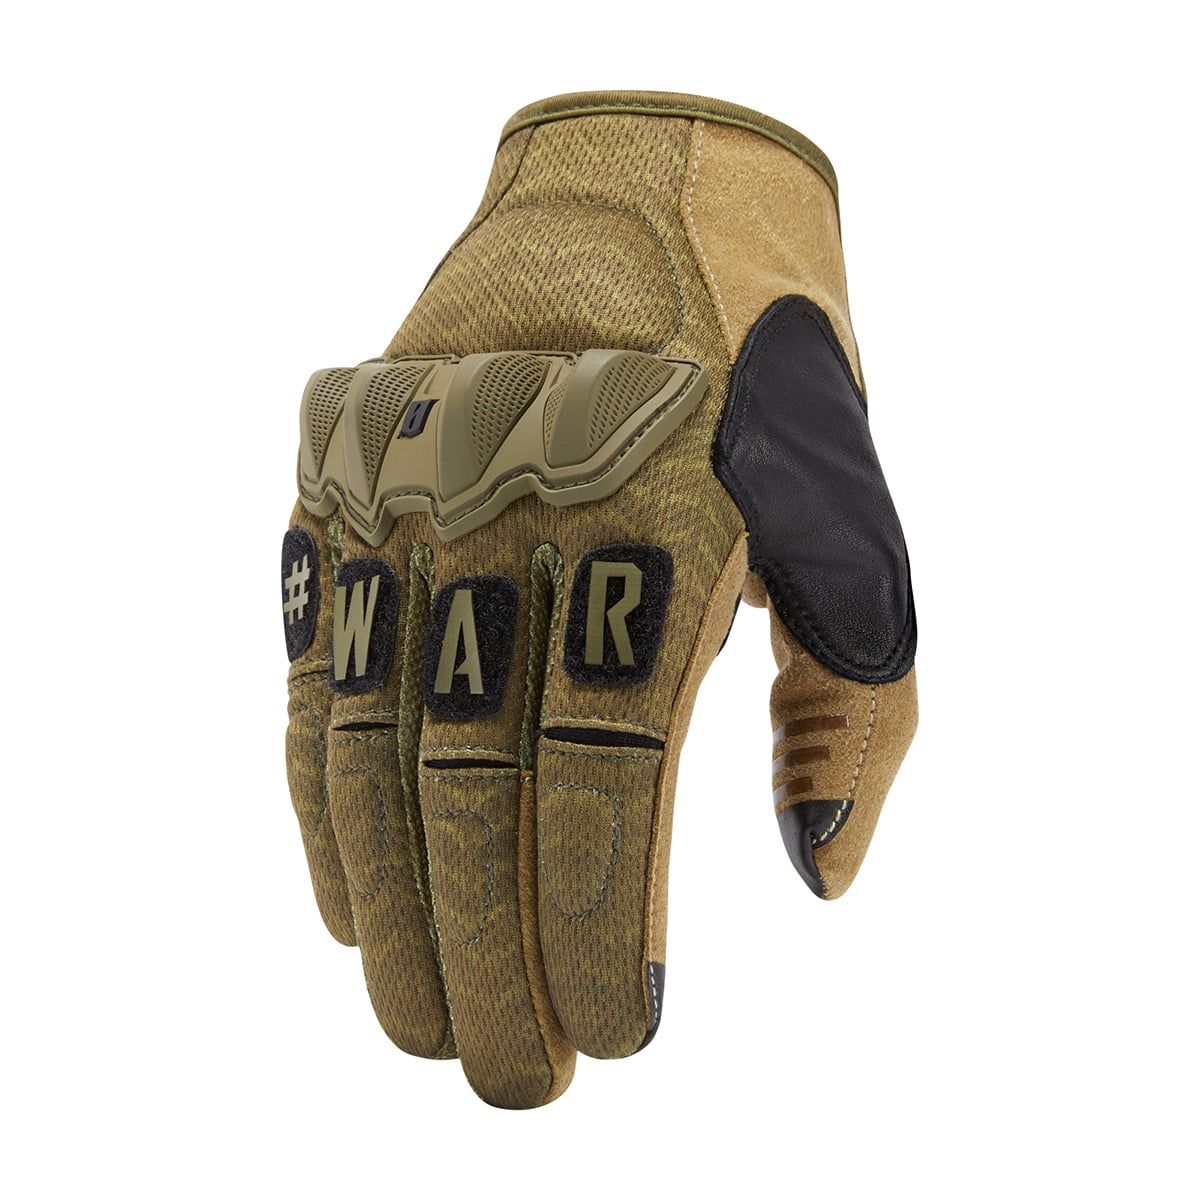 VIKTOS wartorn protective tactical gloves